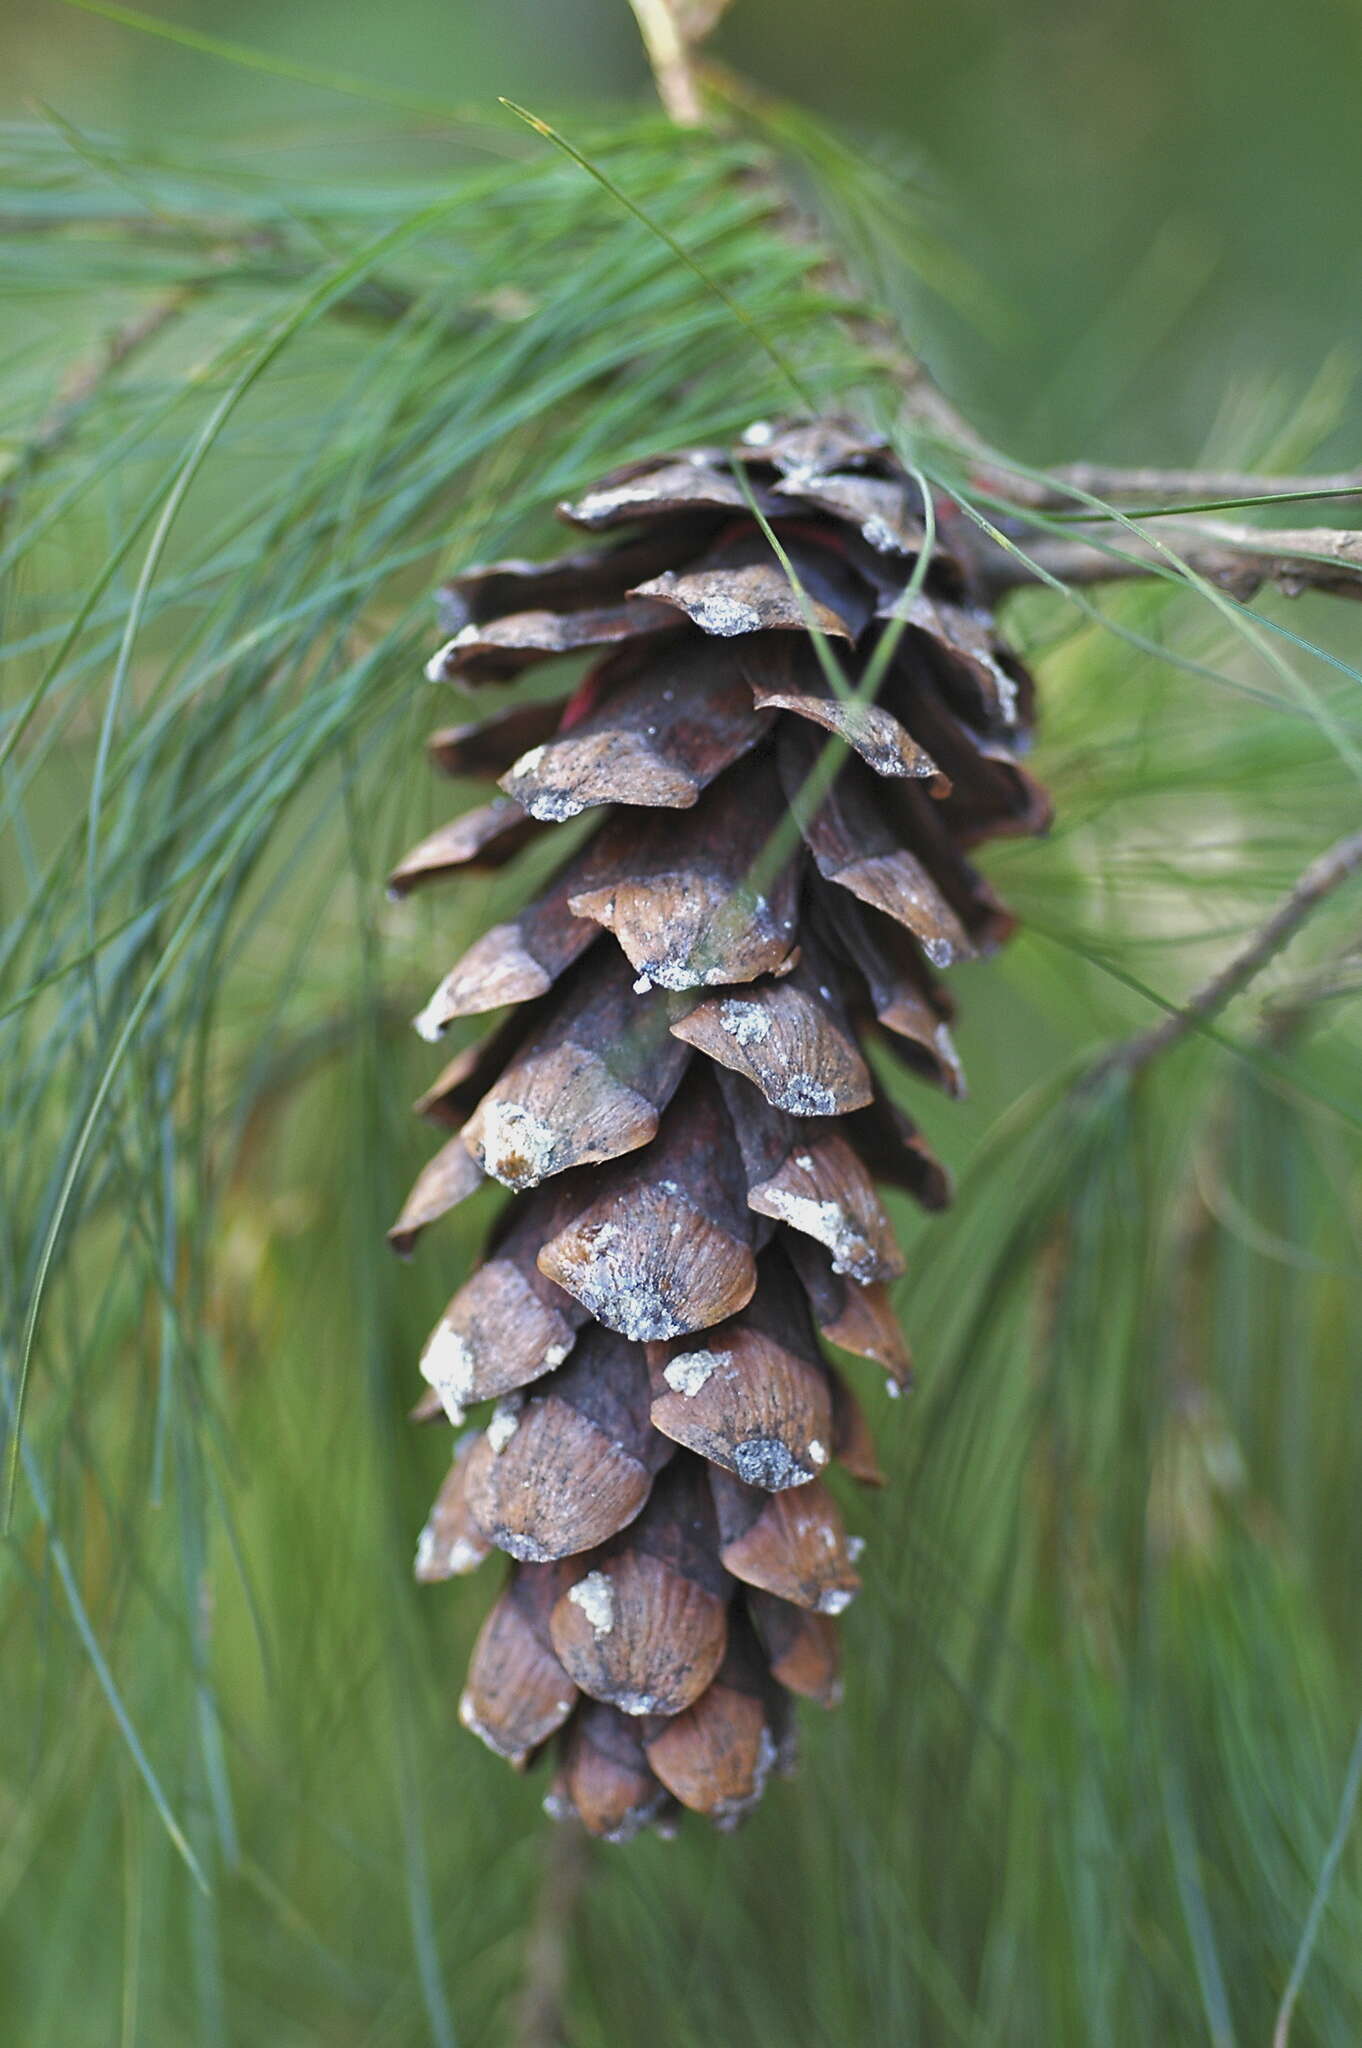 Image of Chiapas White Pine